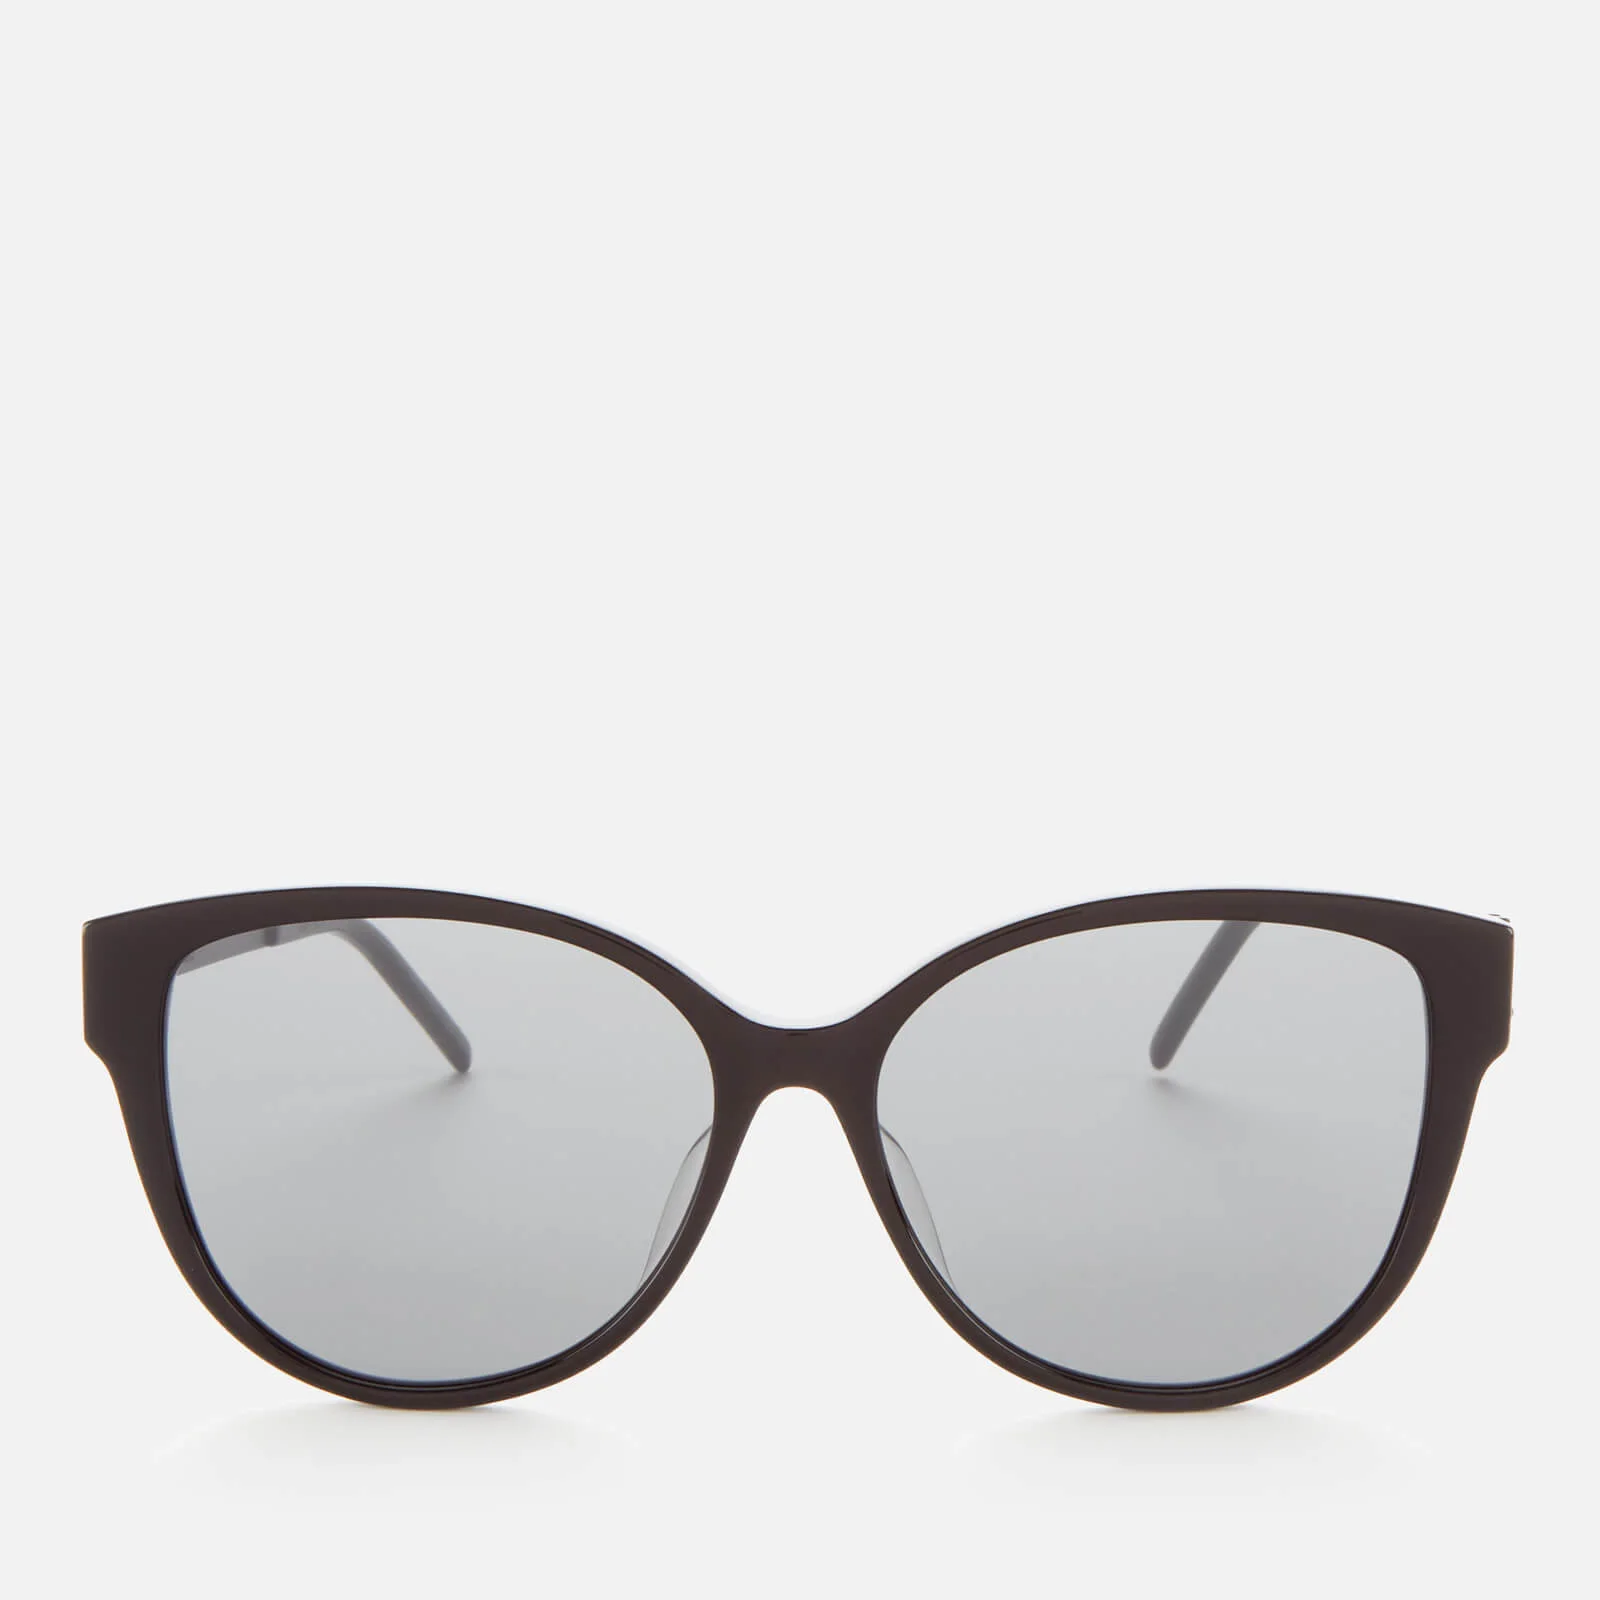 Saint Laurent Women's SLM48S Oversized Acetate Sunglasses - Black/Silver Image 1